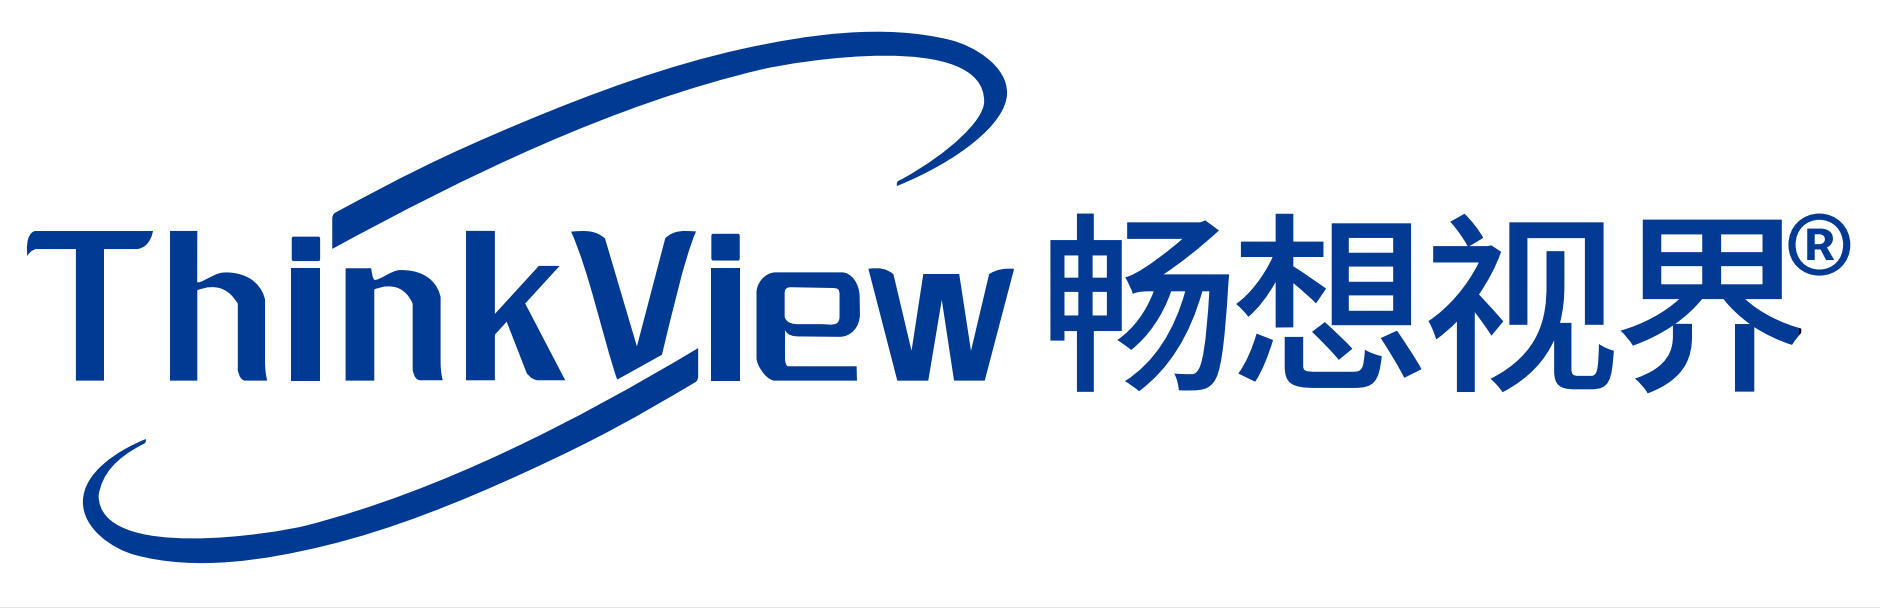 Shenzhen ThinkView technoleg Co., Ltd.